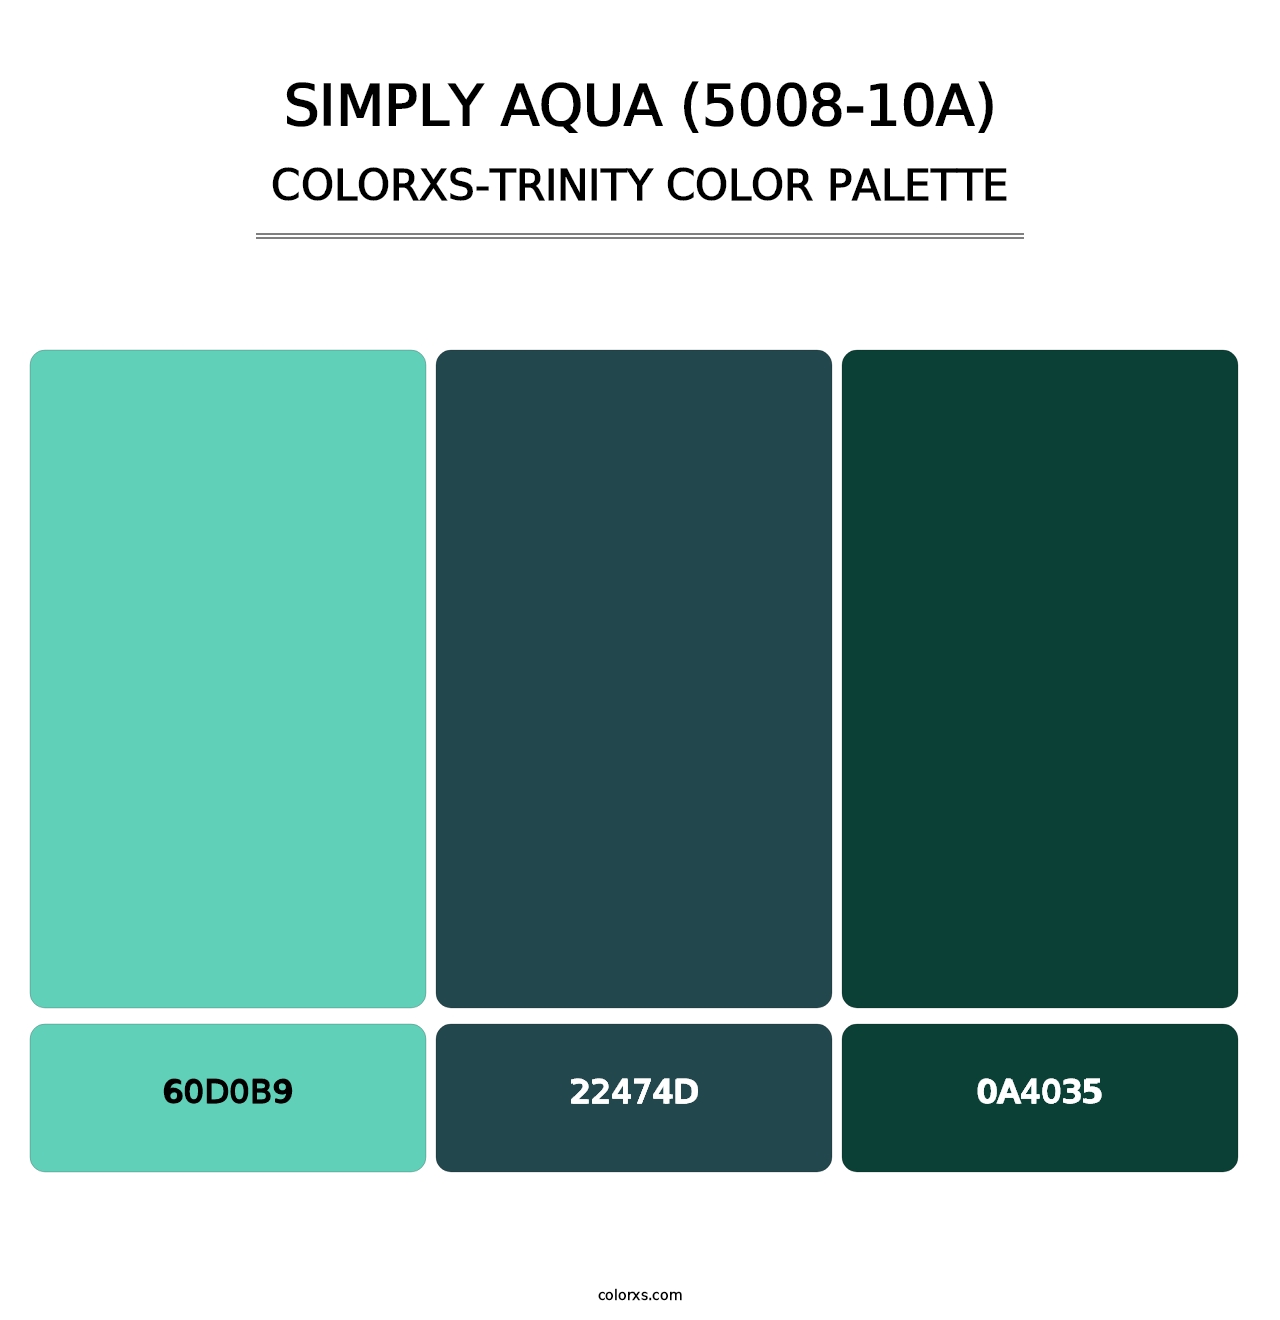 Simply Aqua (5008-10A) - Colorxs Trinity Palette